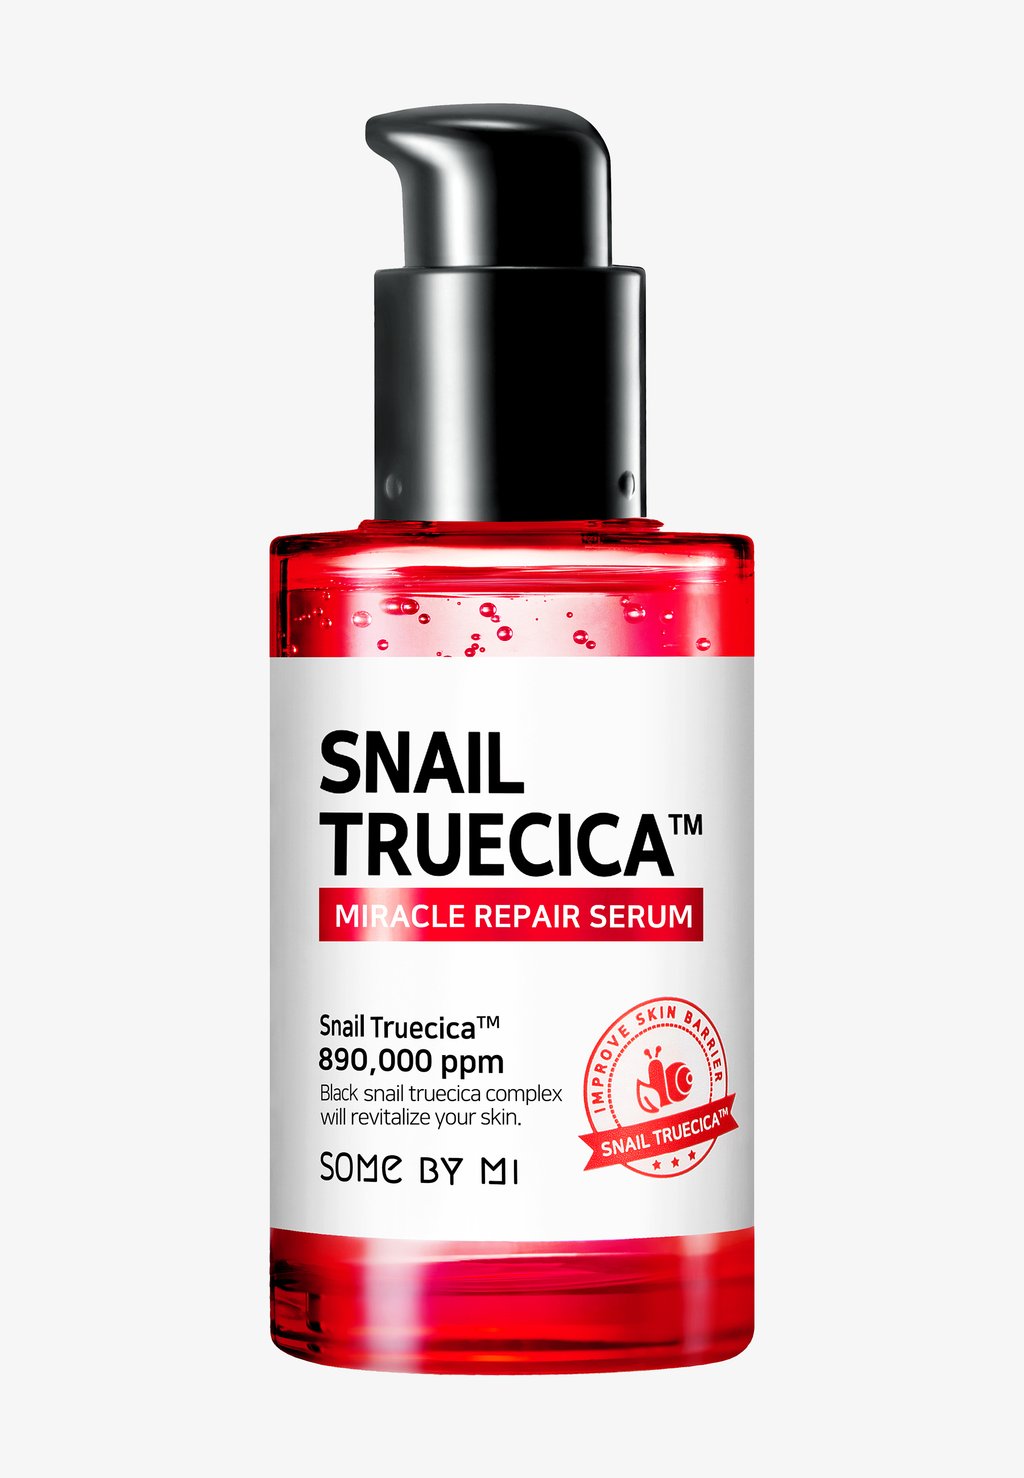 some by mi snail truecica miracle repair starter kit Сыворотка Snail Truecica Miracle Repair Serum SOME BY MI